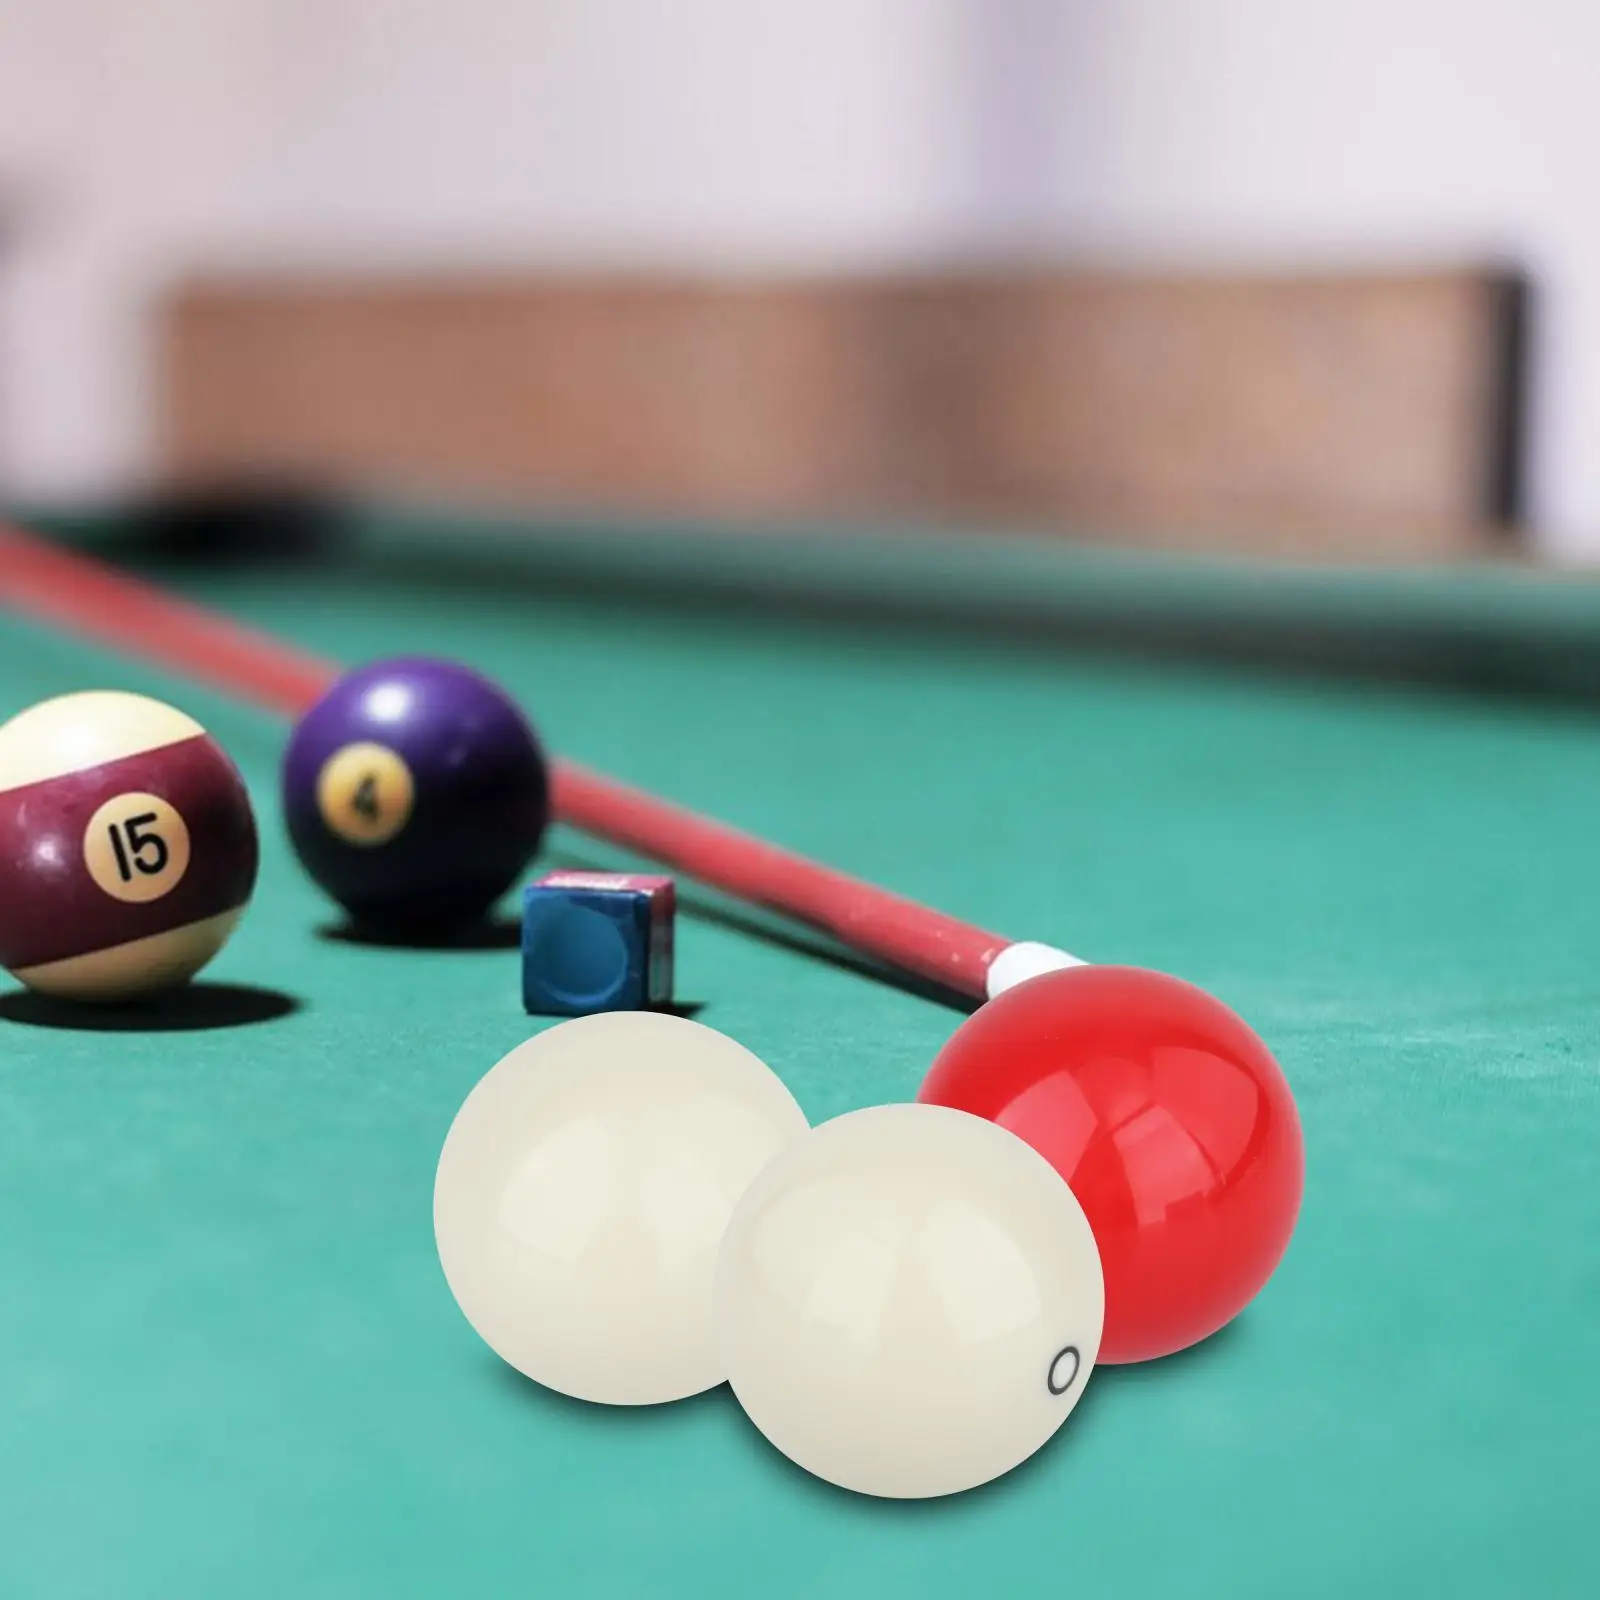 3Pcs Billiard Pool Balls Indoor Sports Cue Balls Training Improve Skills Practice Snooker Carom Balls Set for Women Beginner Men